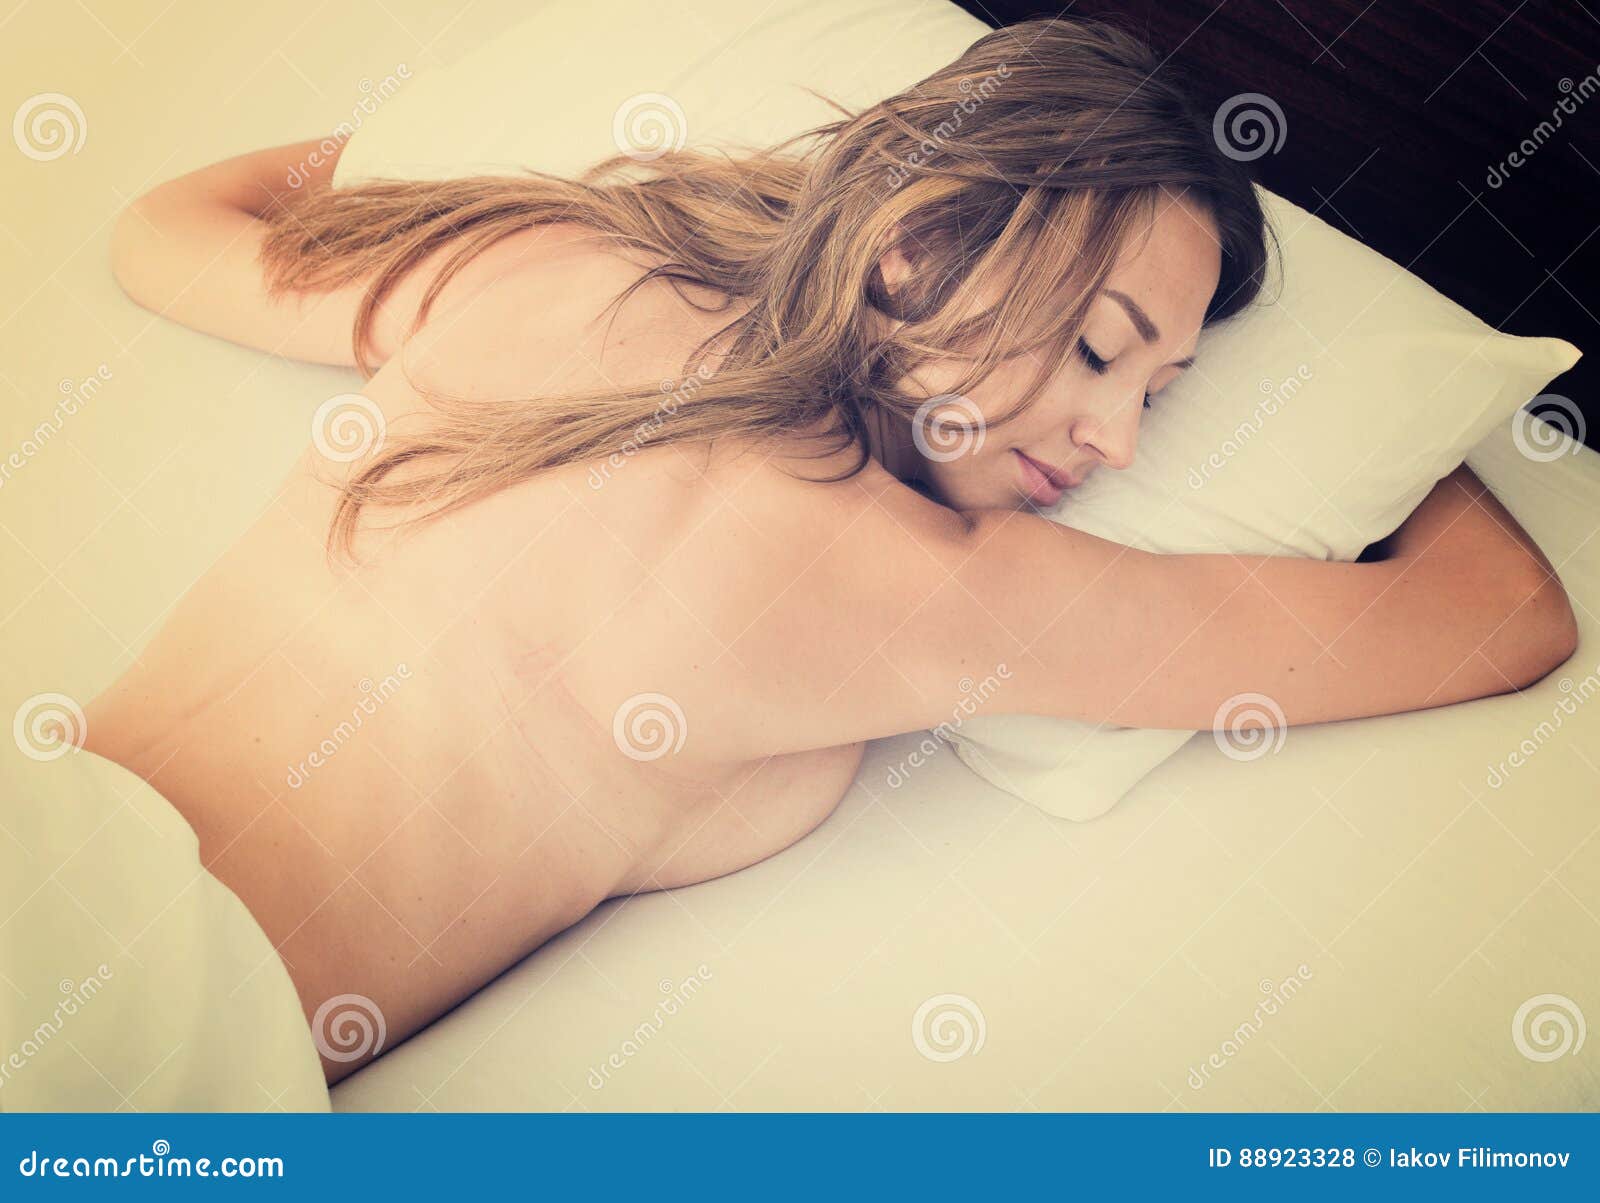 Bedtime Nude Woman